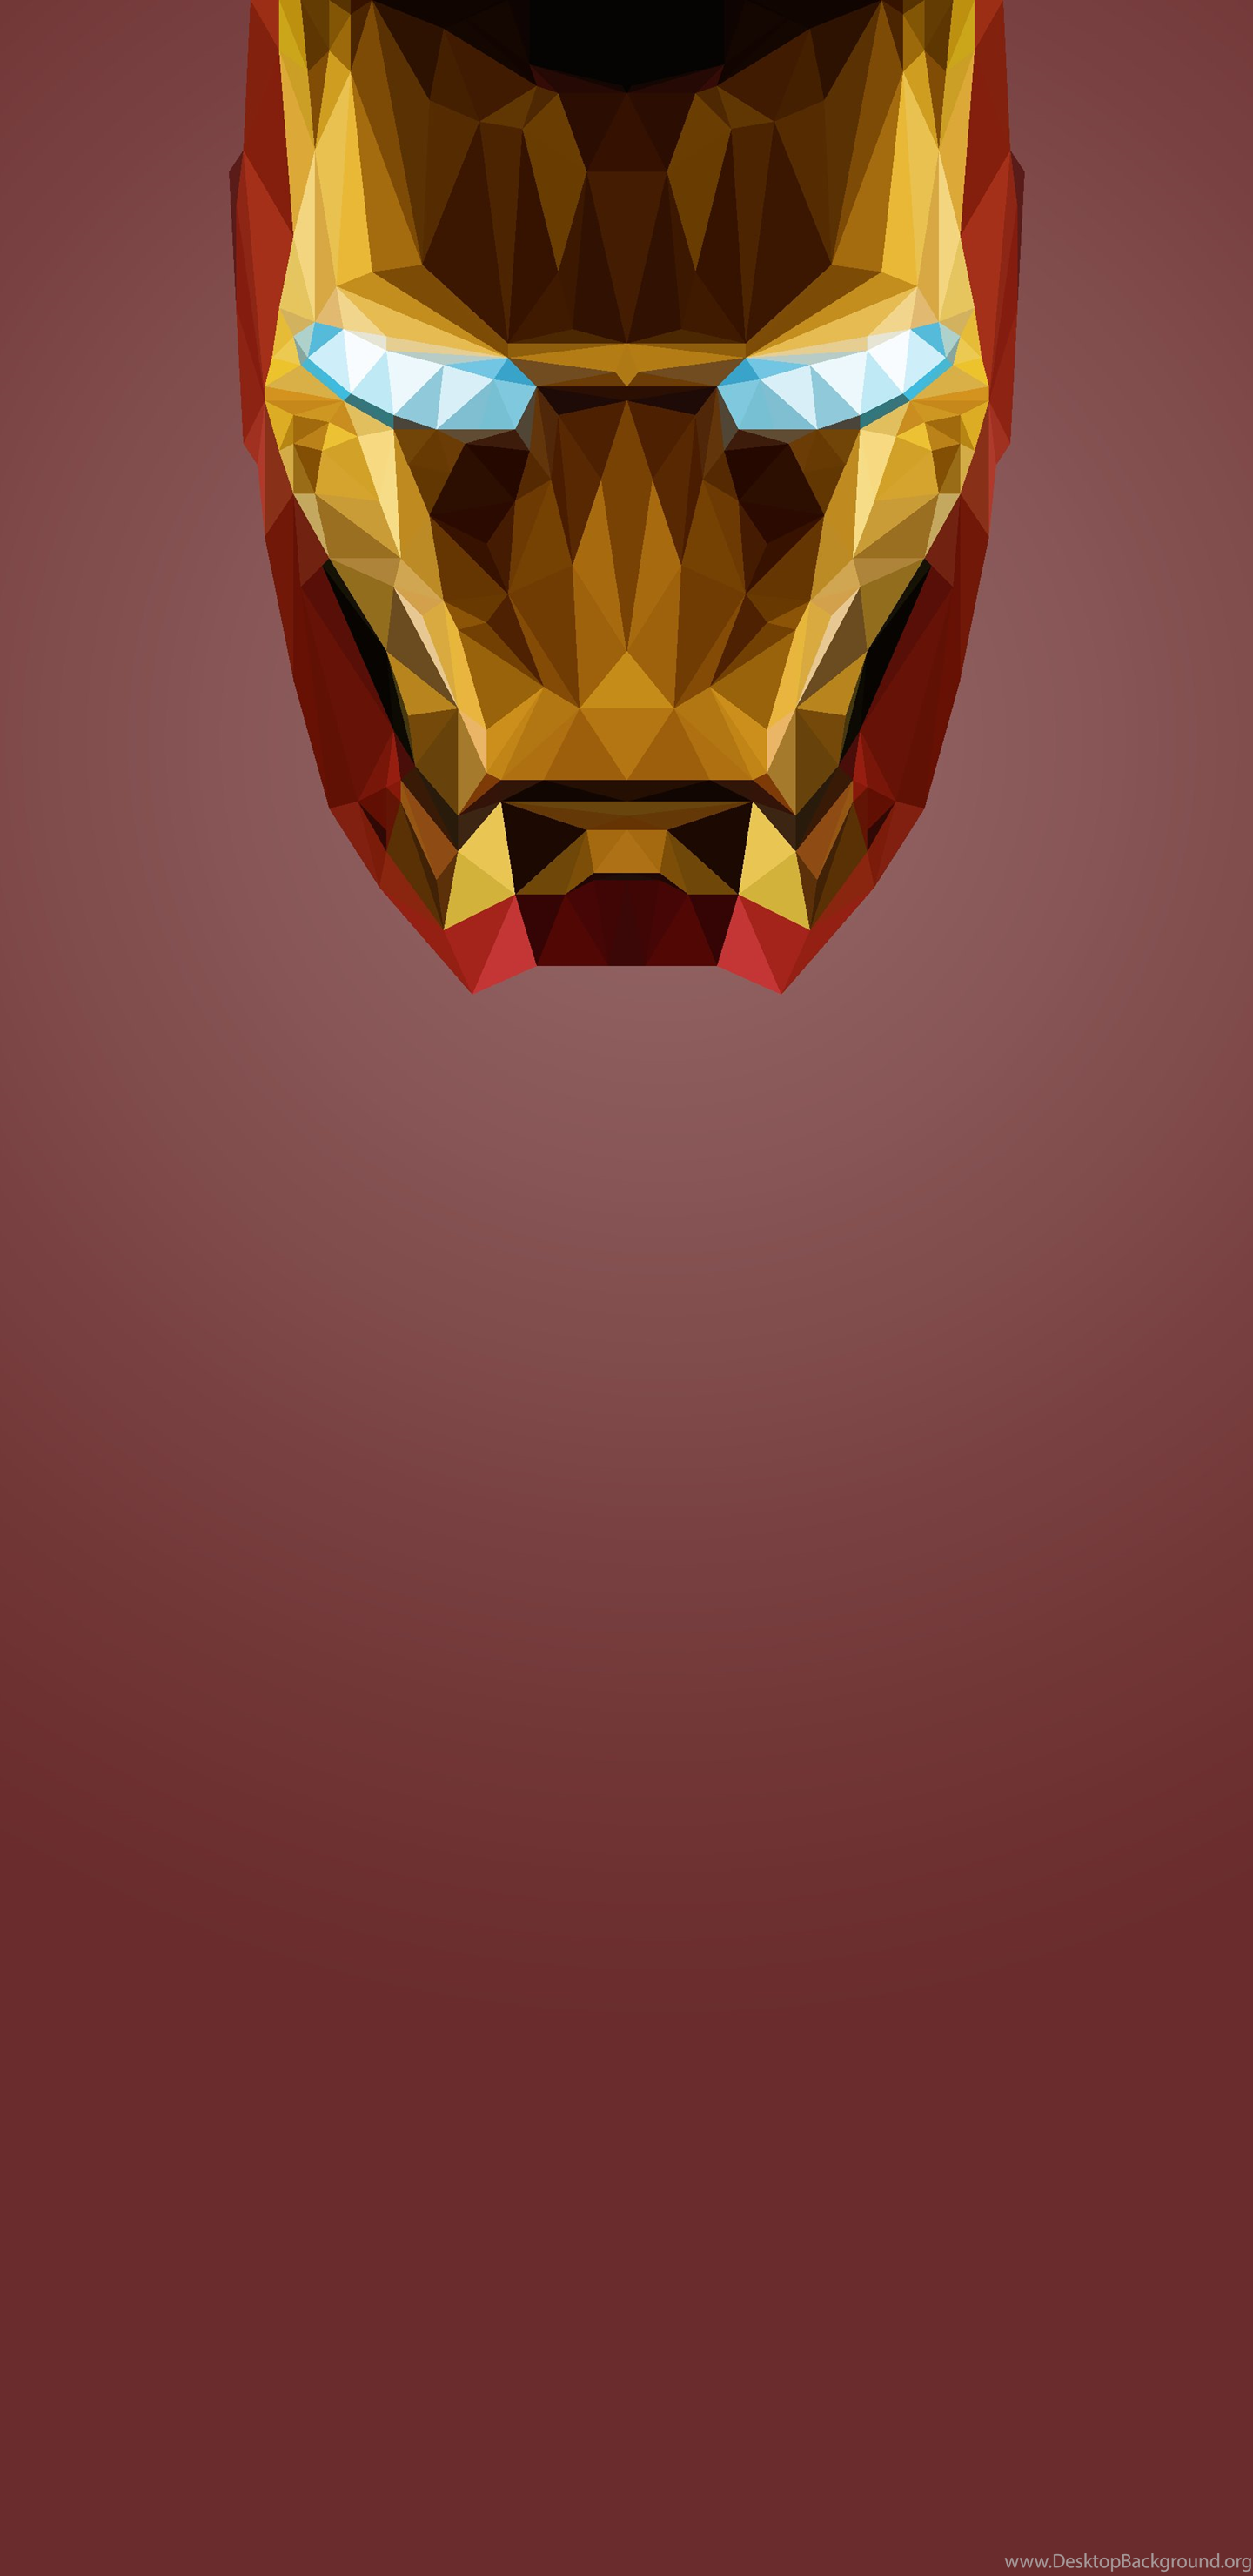 Low Poly Iron Man, Mobile Wallpaper, 2491 × 3600 Imgur Desktop Background